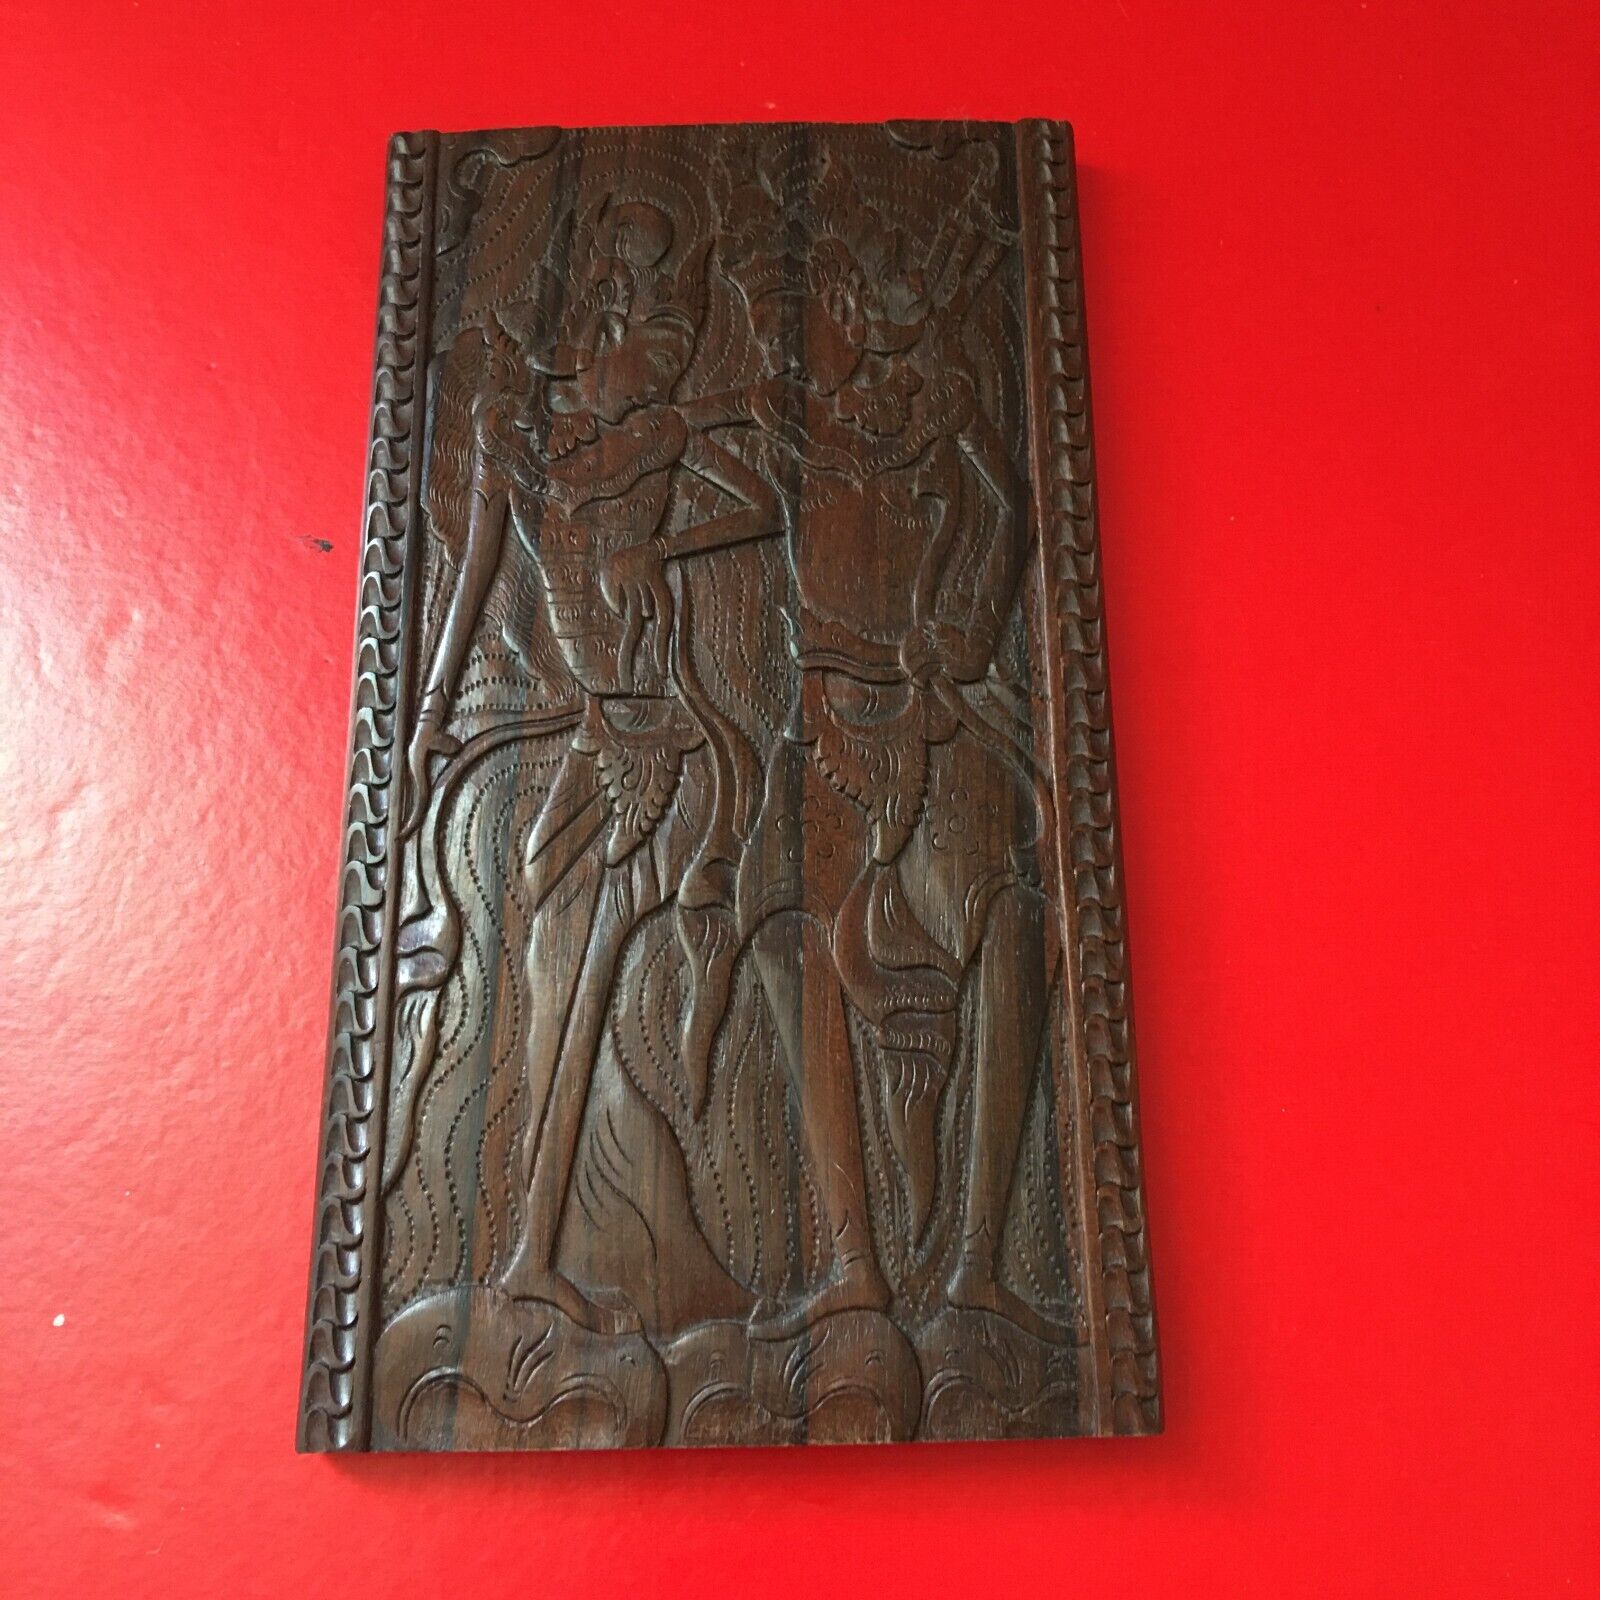 Vintage Super Neat Carved Figures on Rose Wood Board Rosewood Plaque 7.25